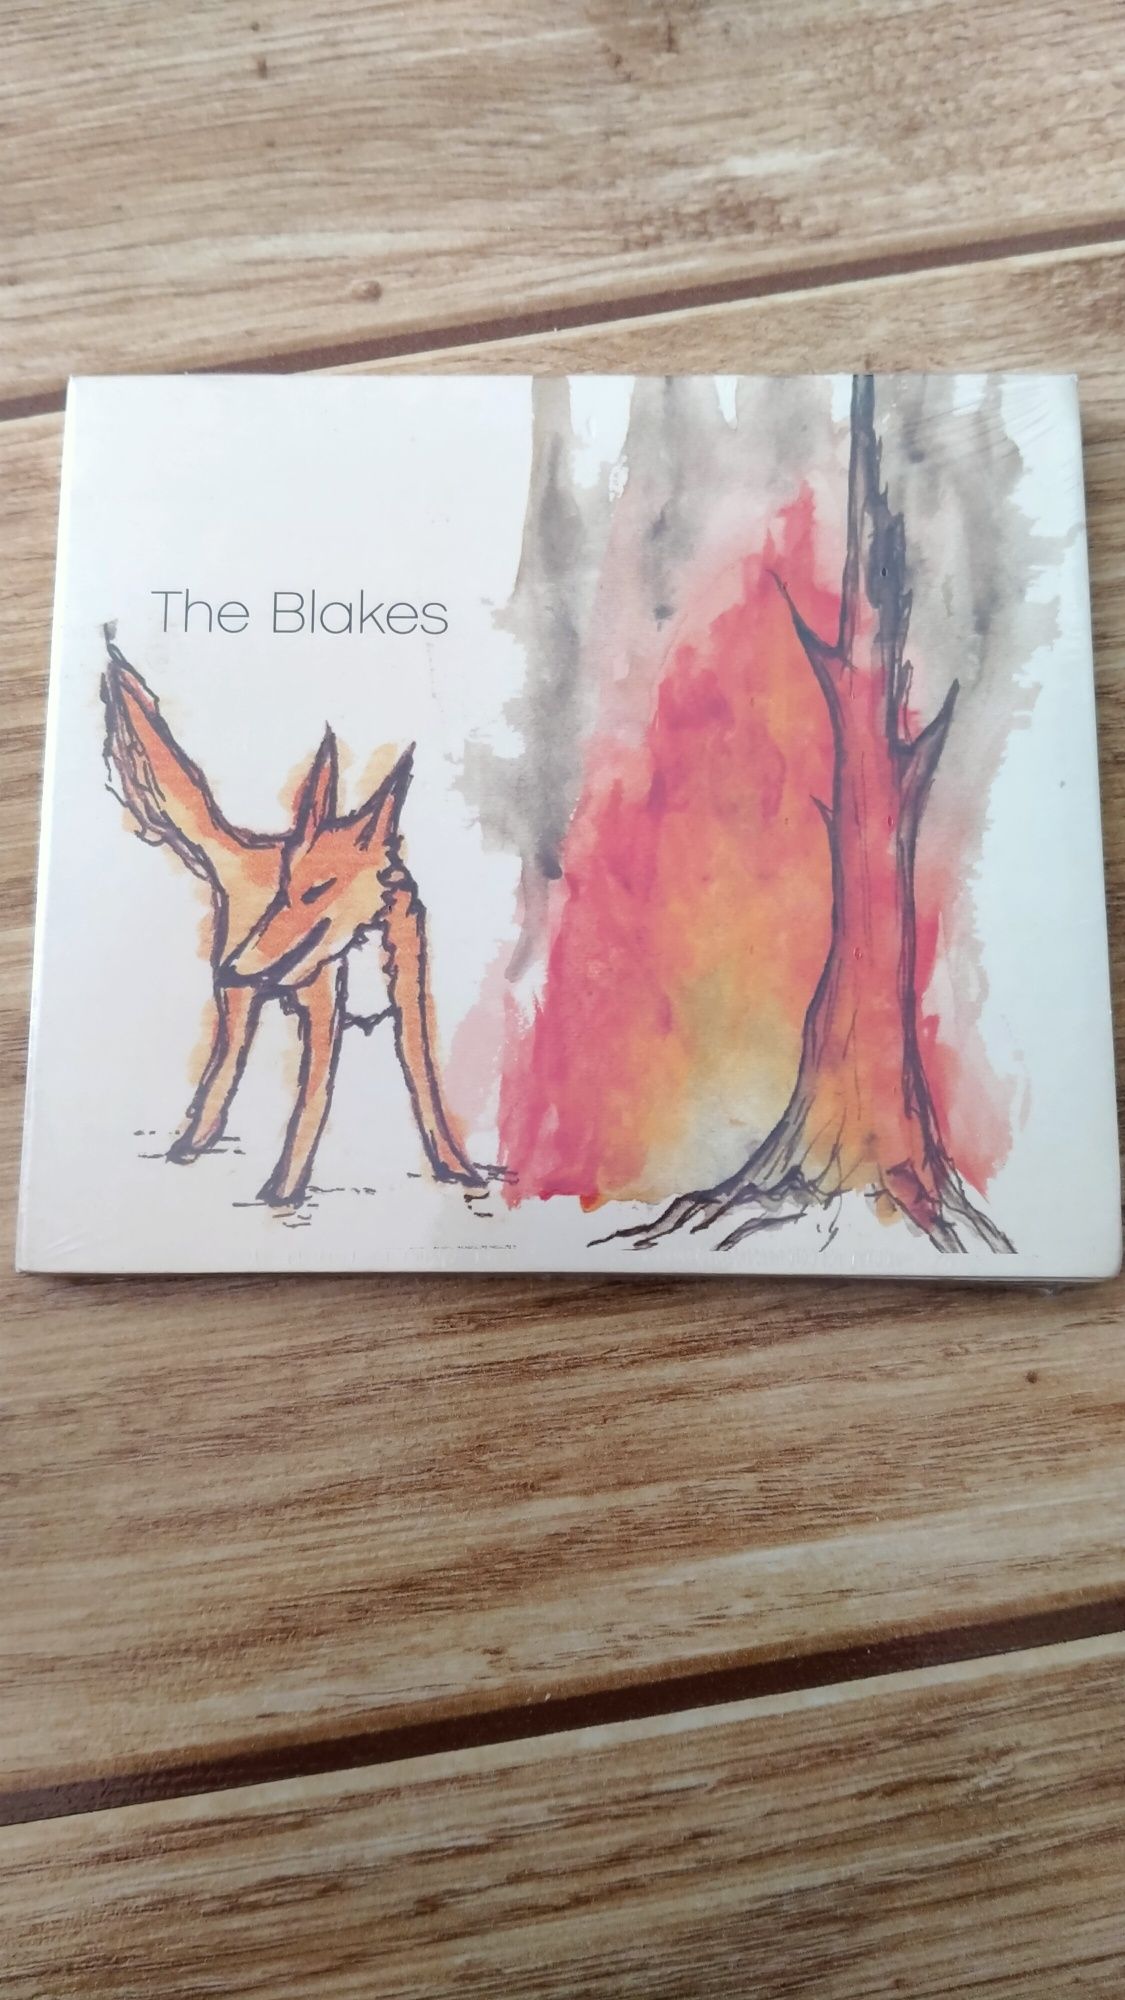 The Blakes rock cd